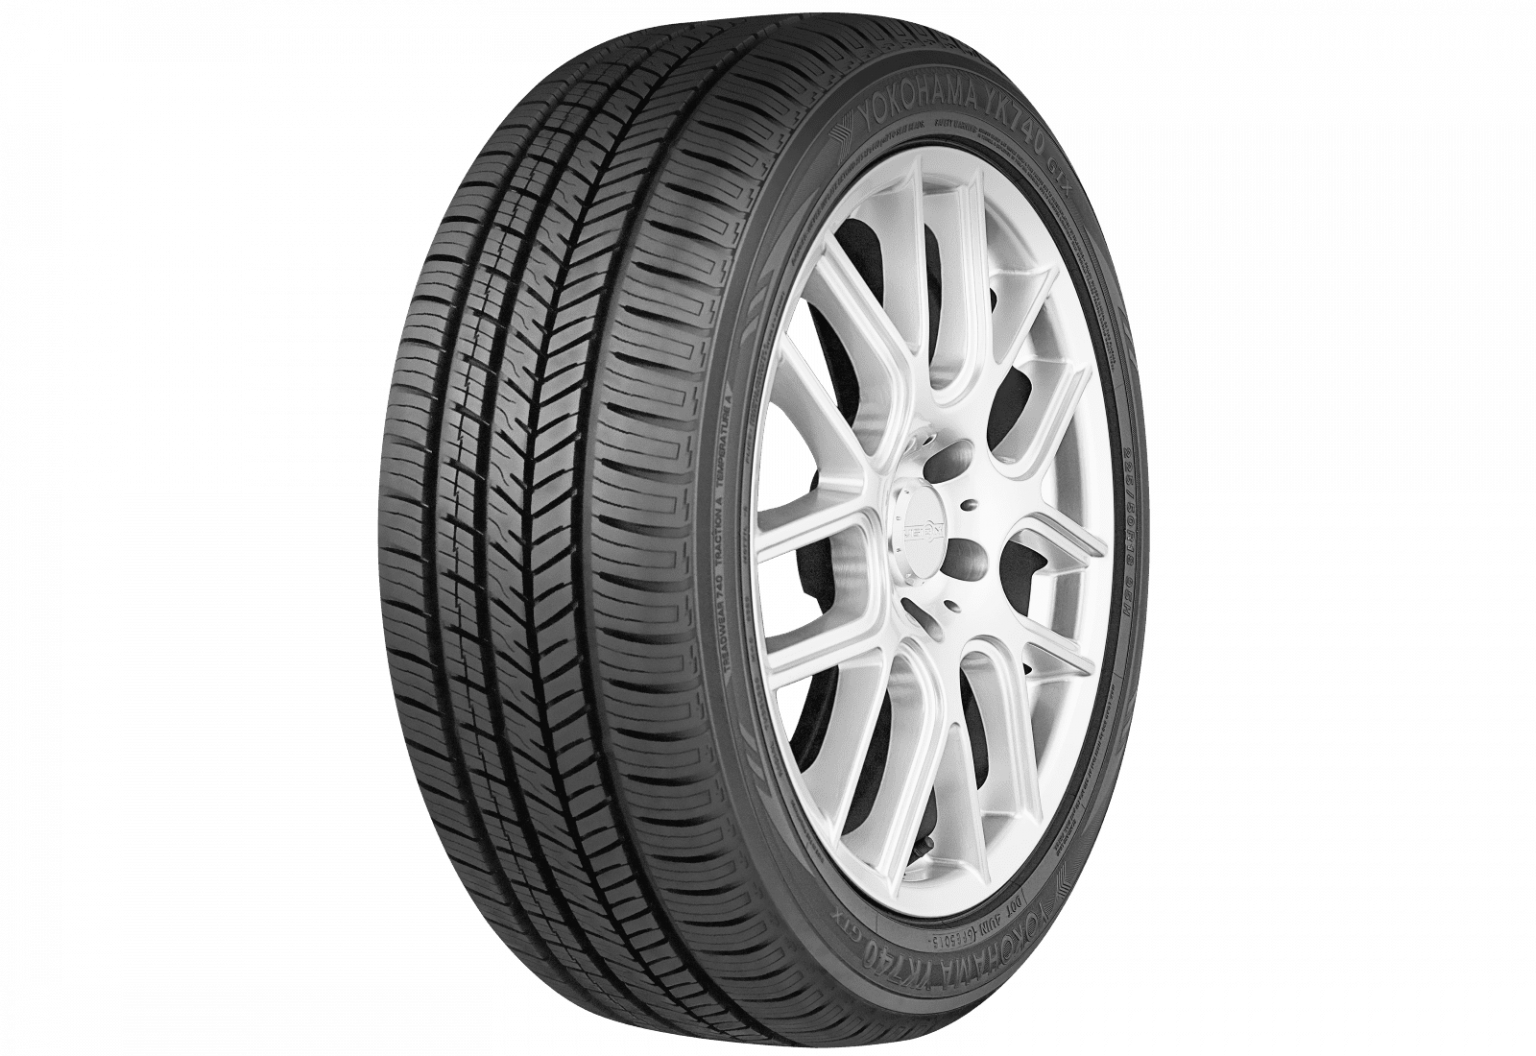 yokohama-yk740-gtx-review-tire-space-tires-reviews-all-brands